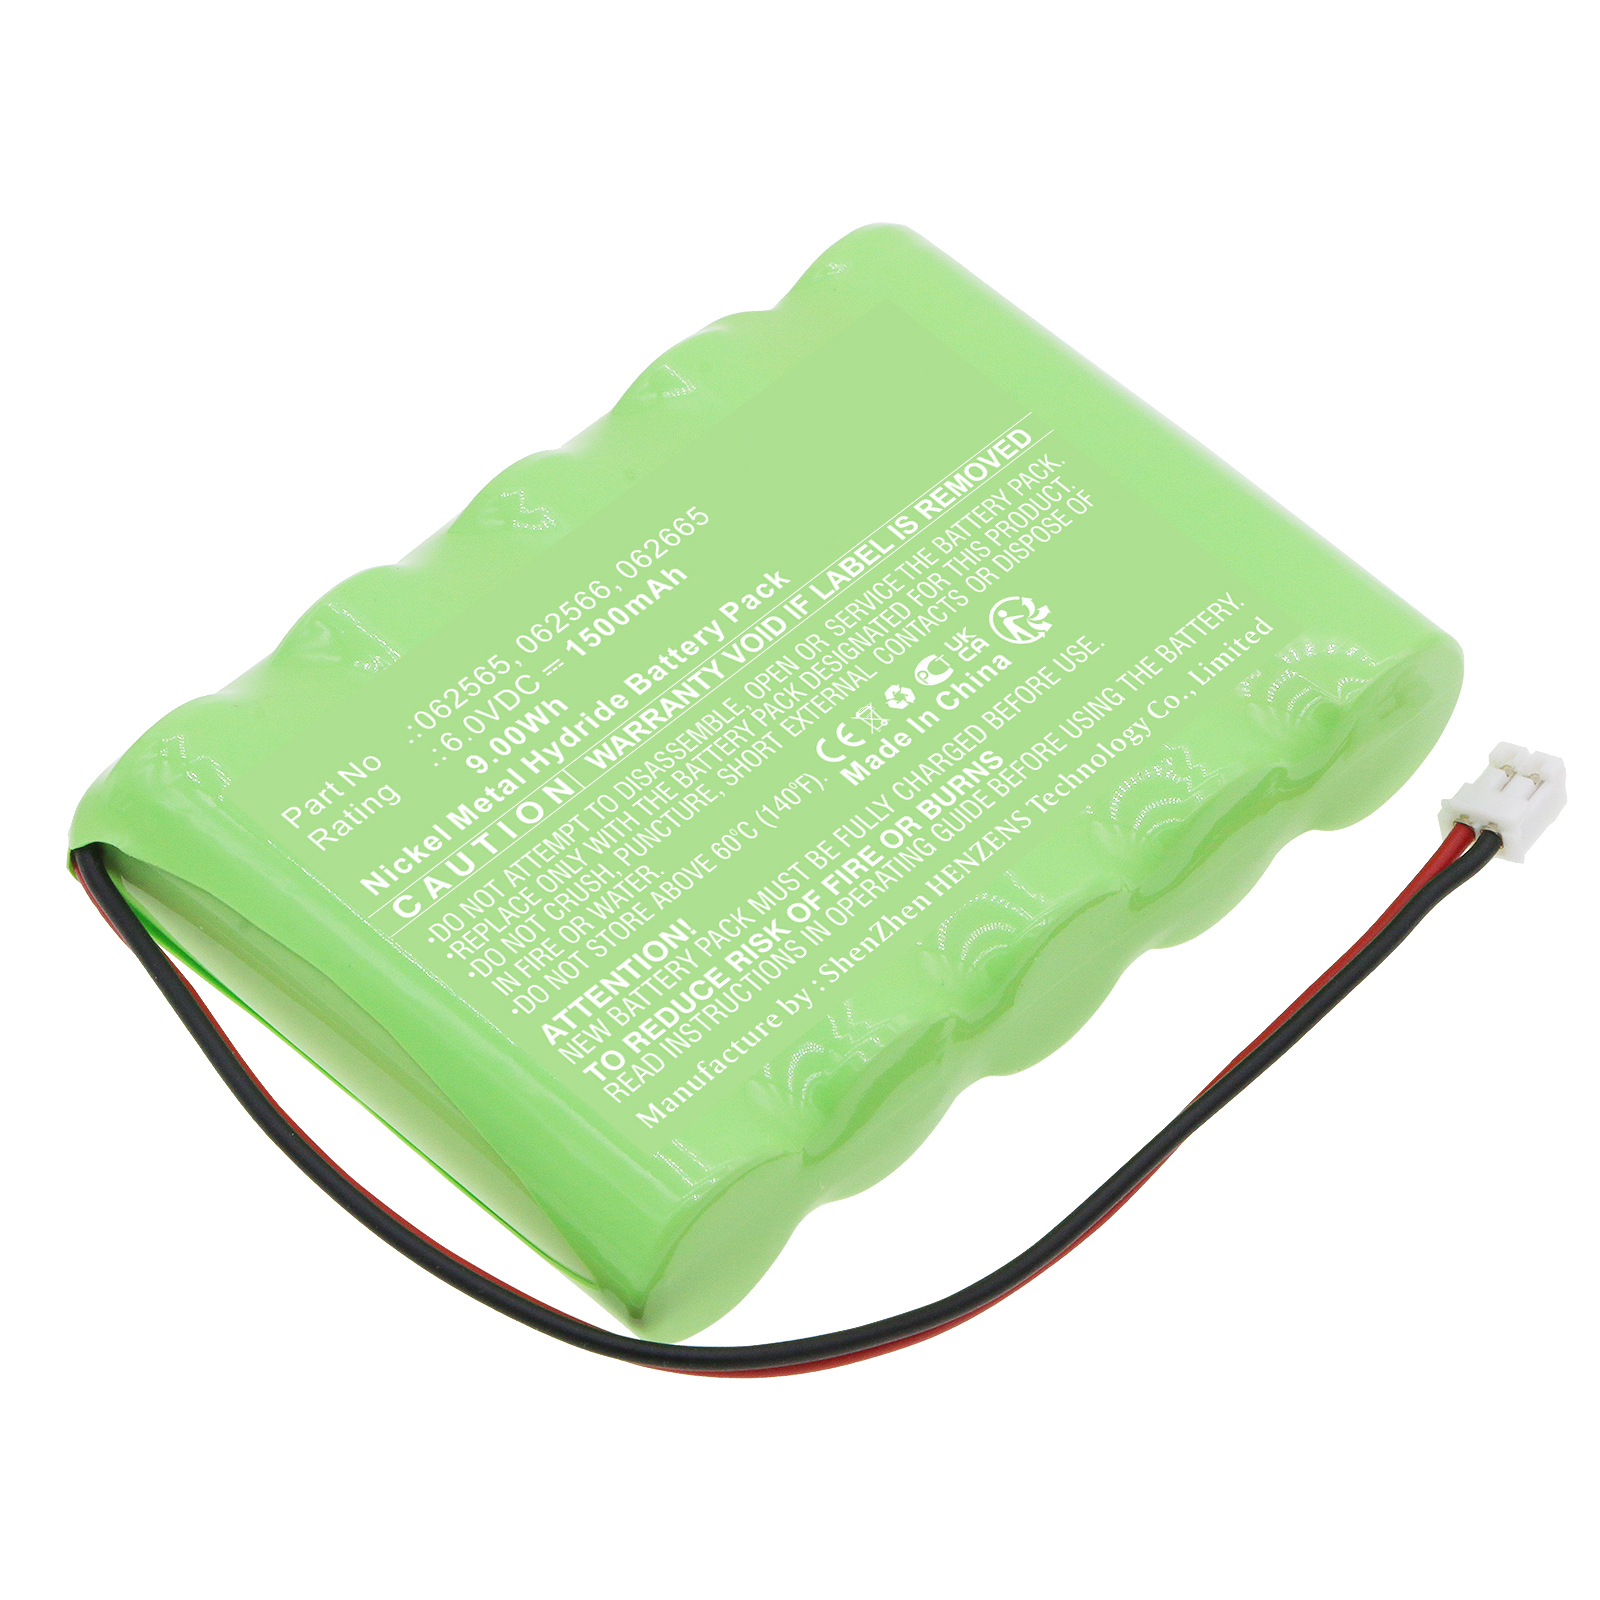 Synergy Digital Emergency Lighting Battery, Compatible with Legrand GRRHC11KT022 Emergency Lighting Battery (Ni-MH, 6V, 1500mAh)